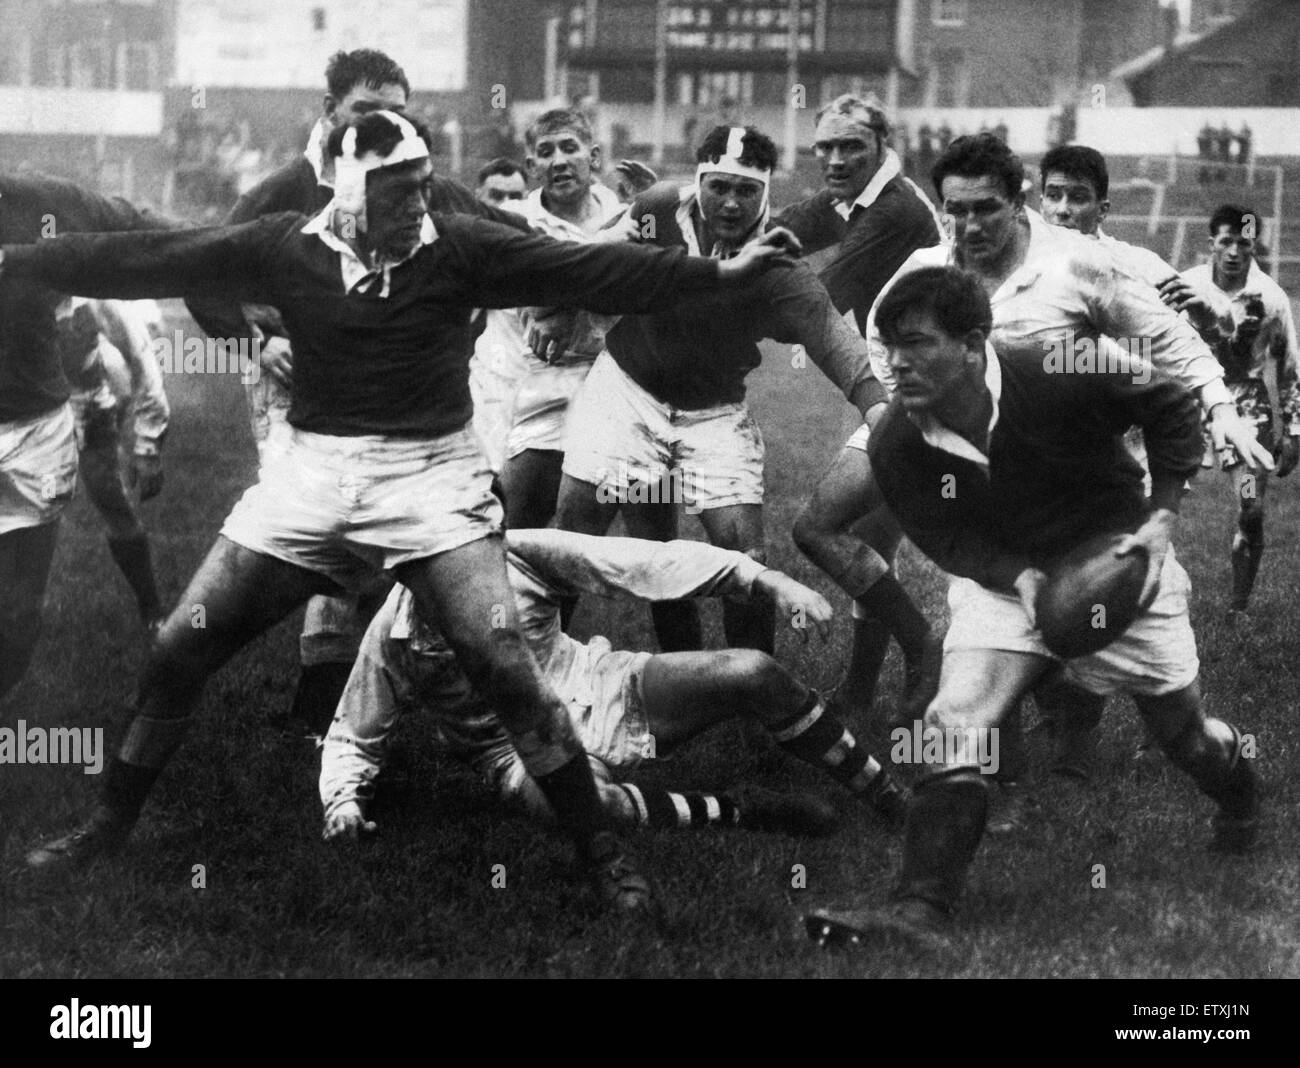 Welsh internazionale di rugby union player Bryn Meredith in azione. Circa nel 1960. Foto Stock